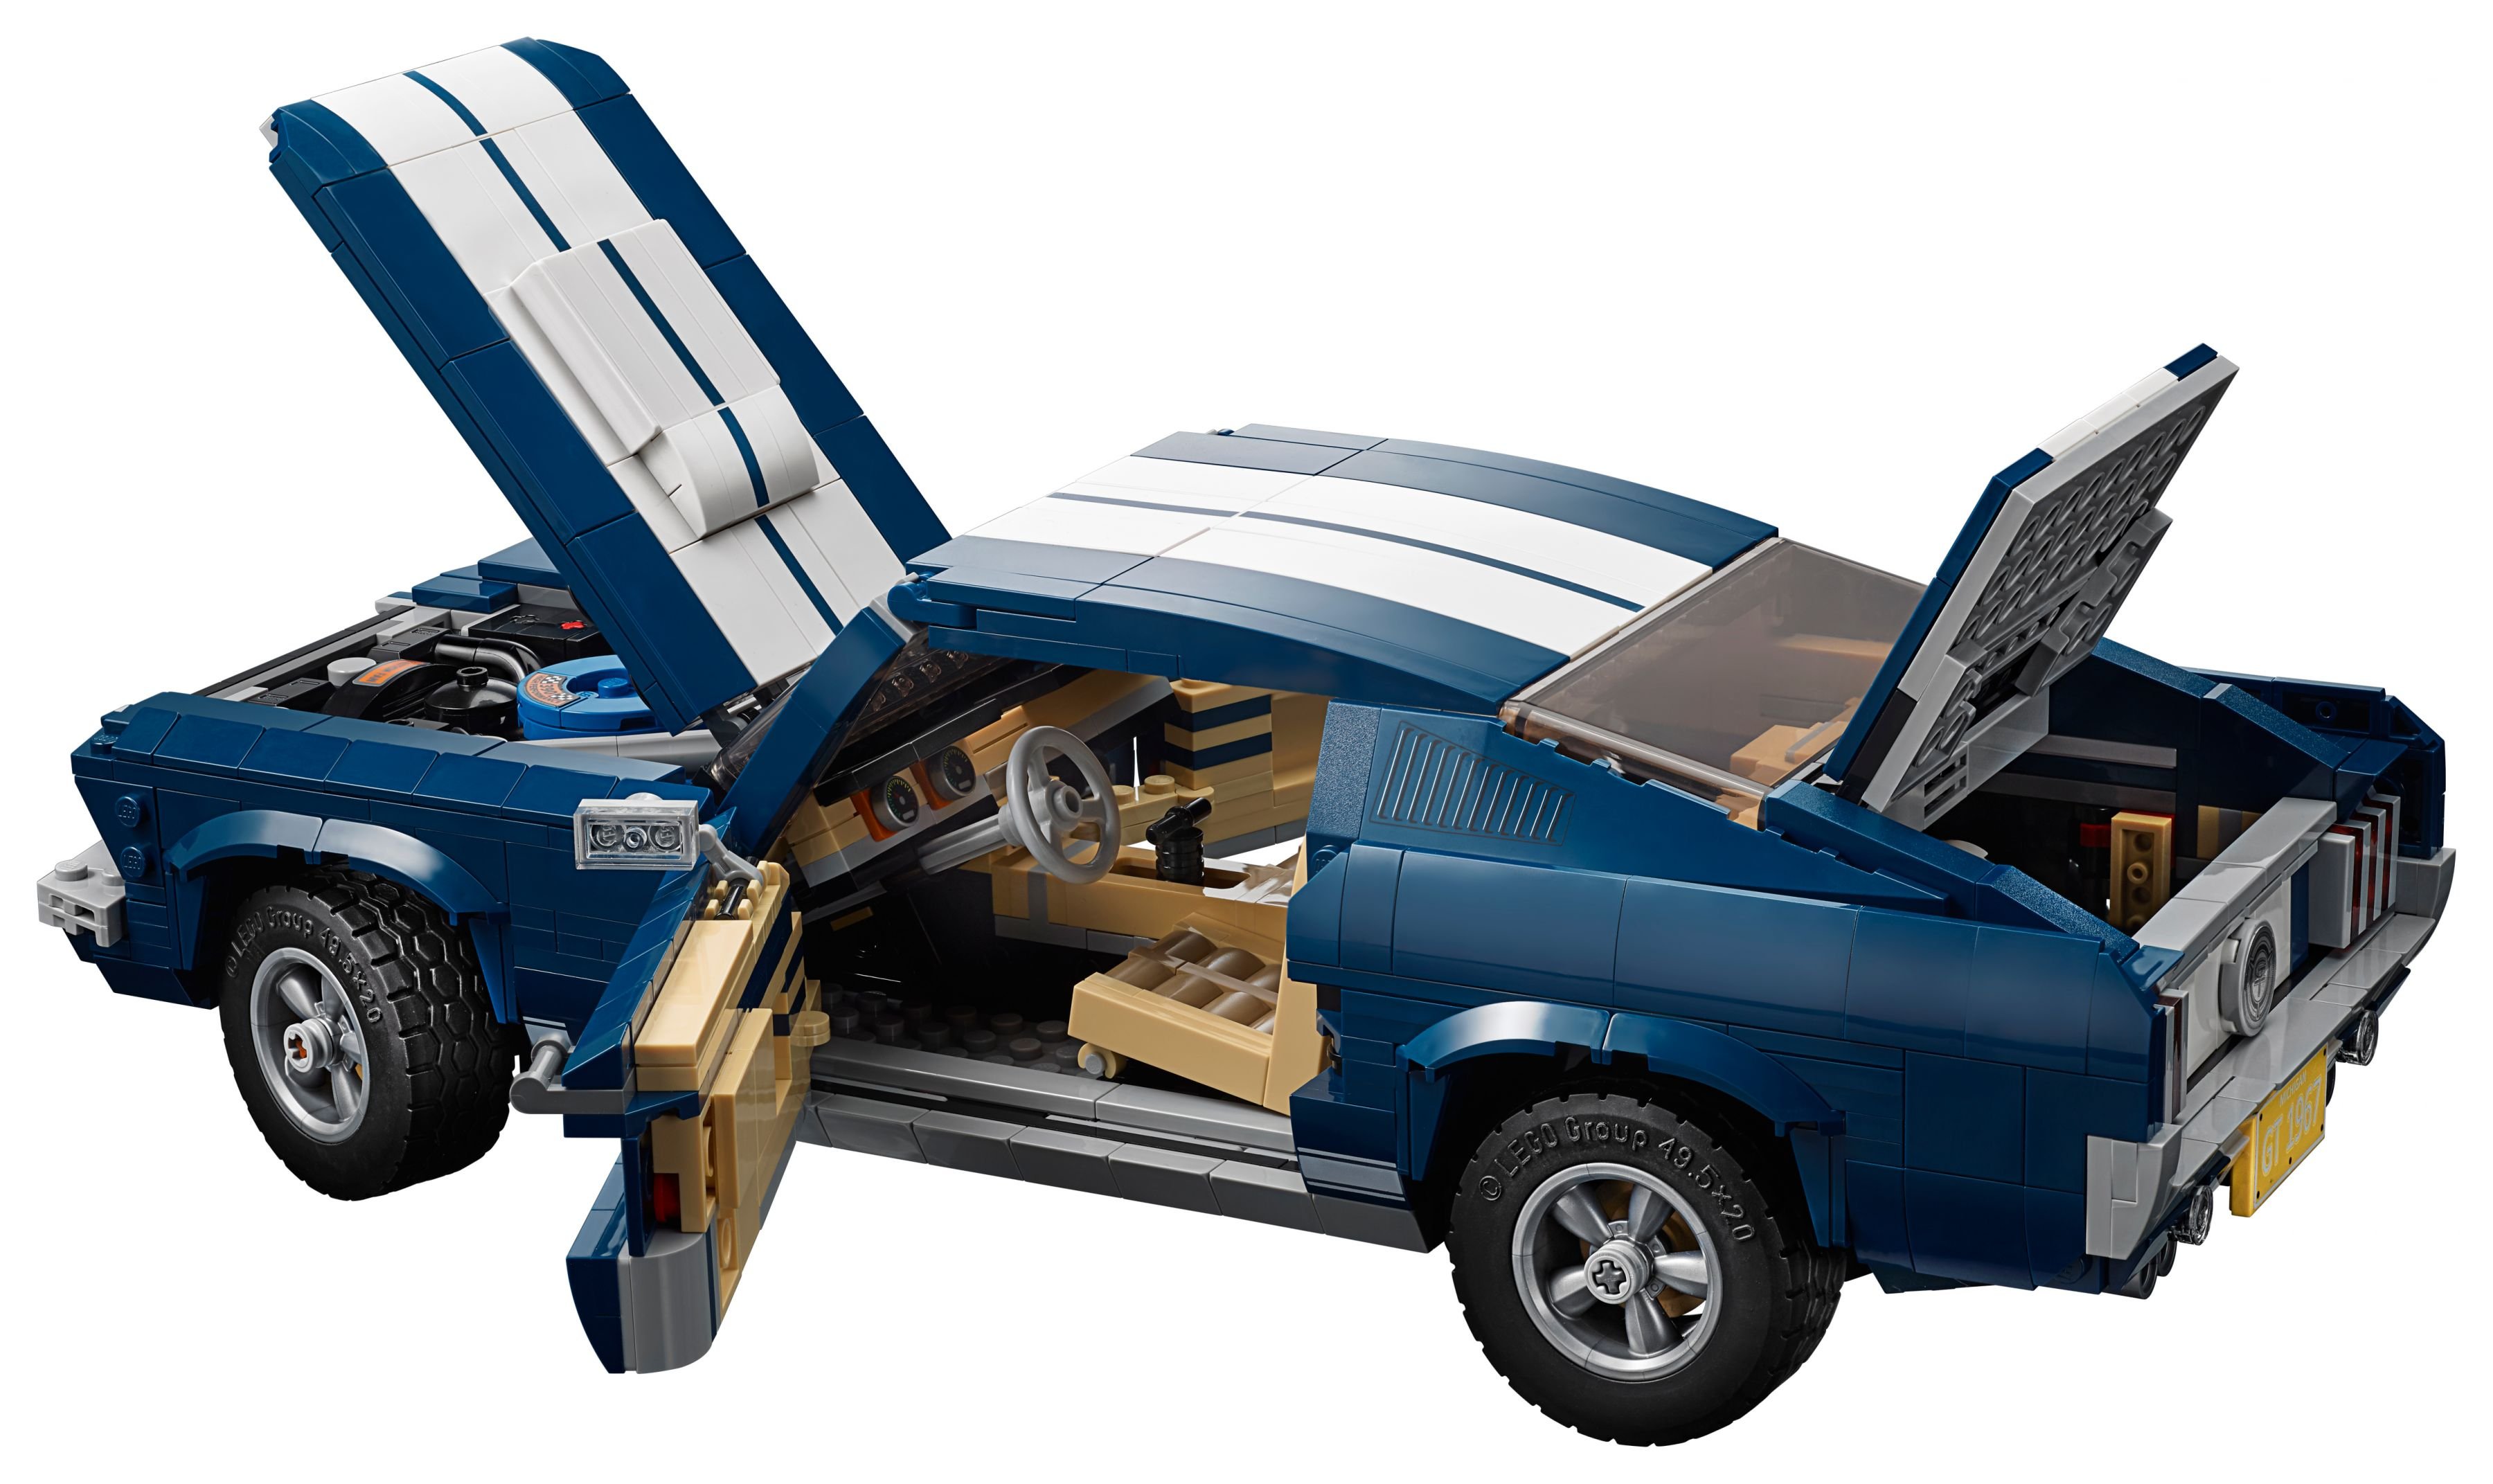 LEGO Advanced Models 10265 Ford Mustang GT LEGO_10265_alt10.jpg